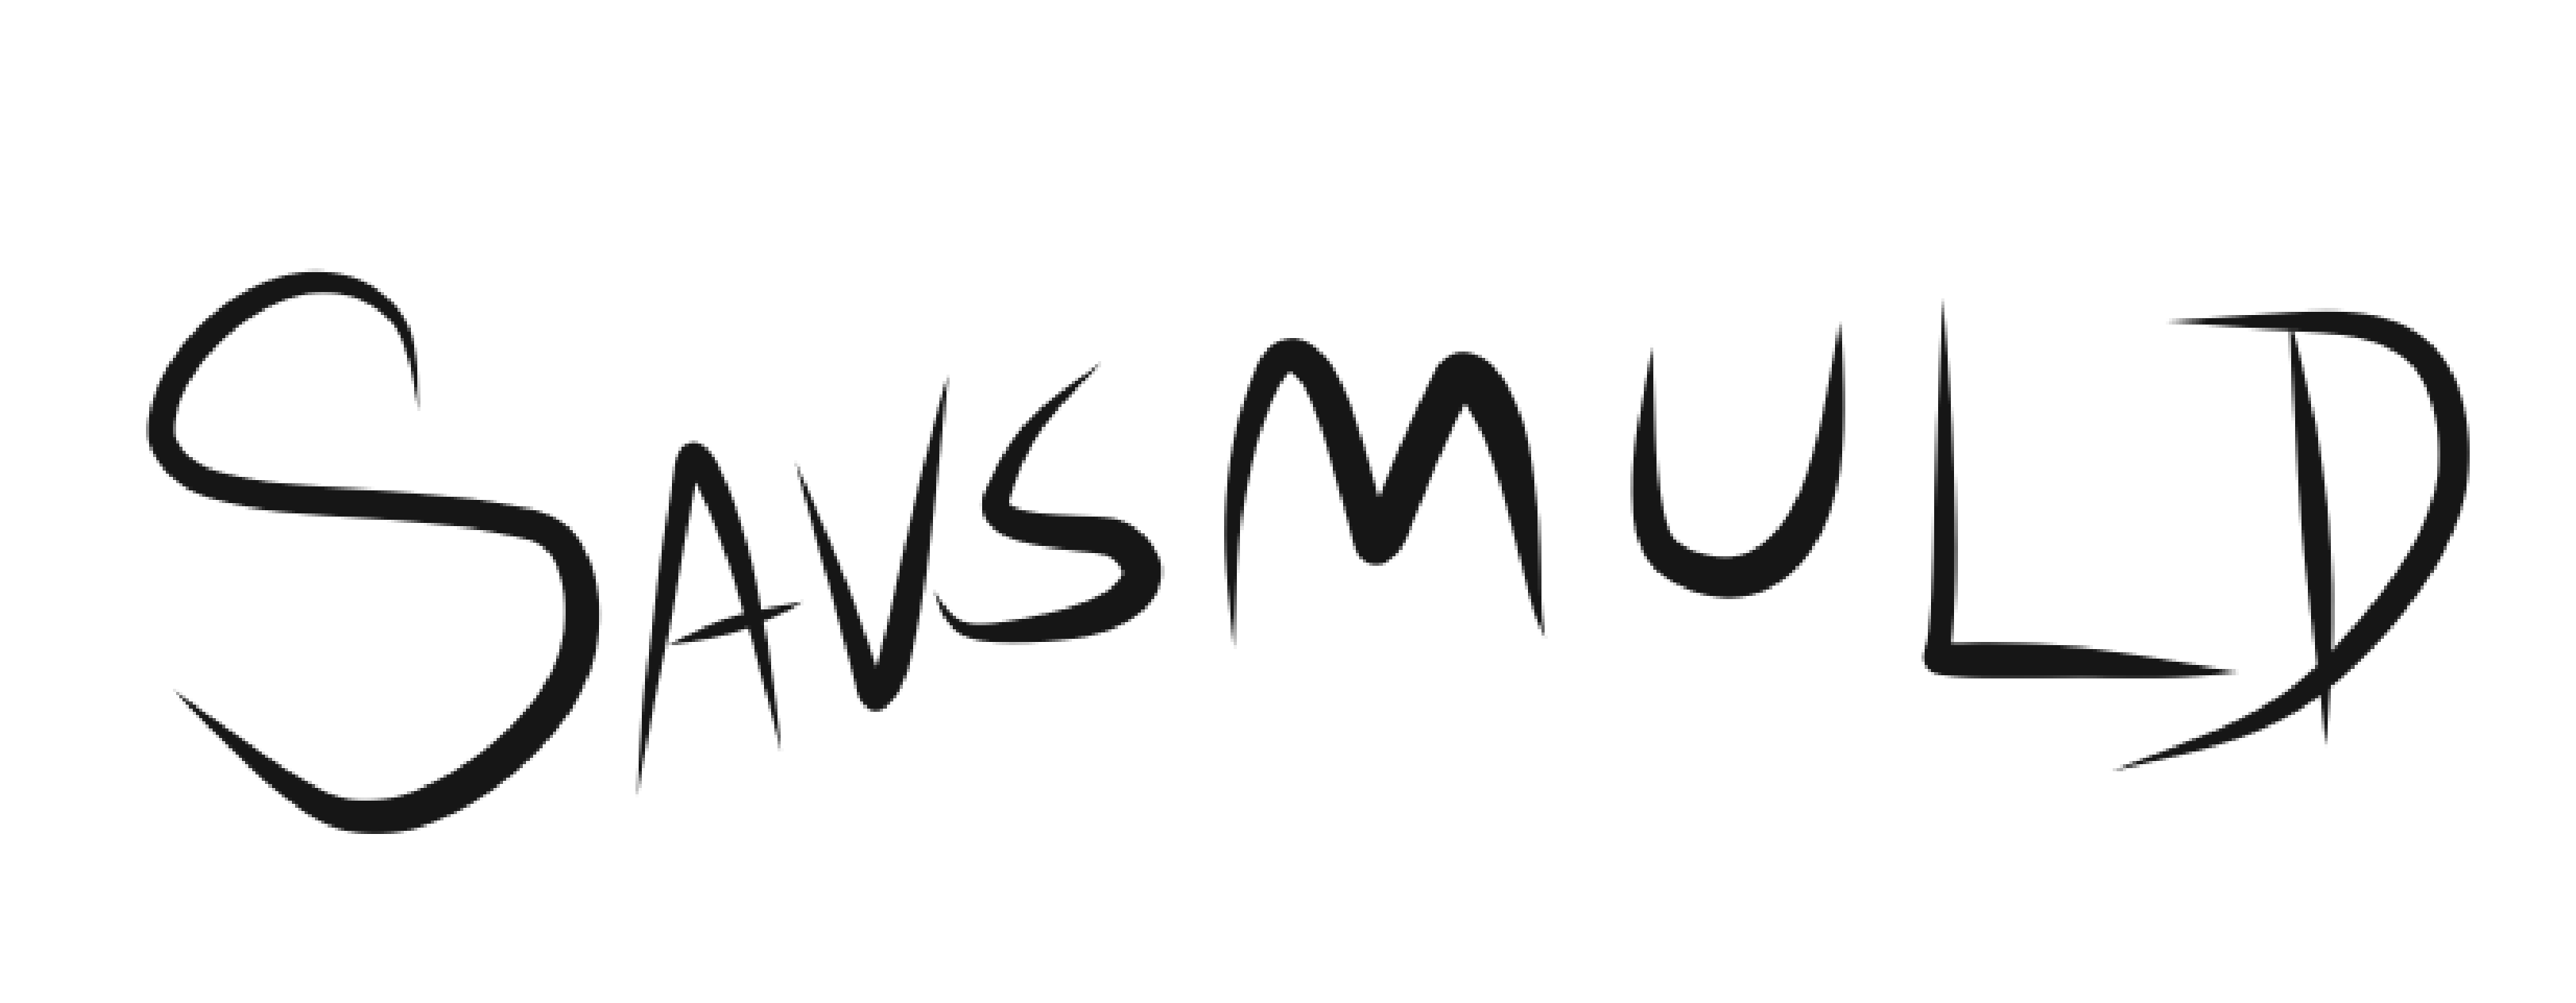 Savsmuld logo med transparens baggrund